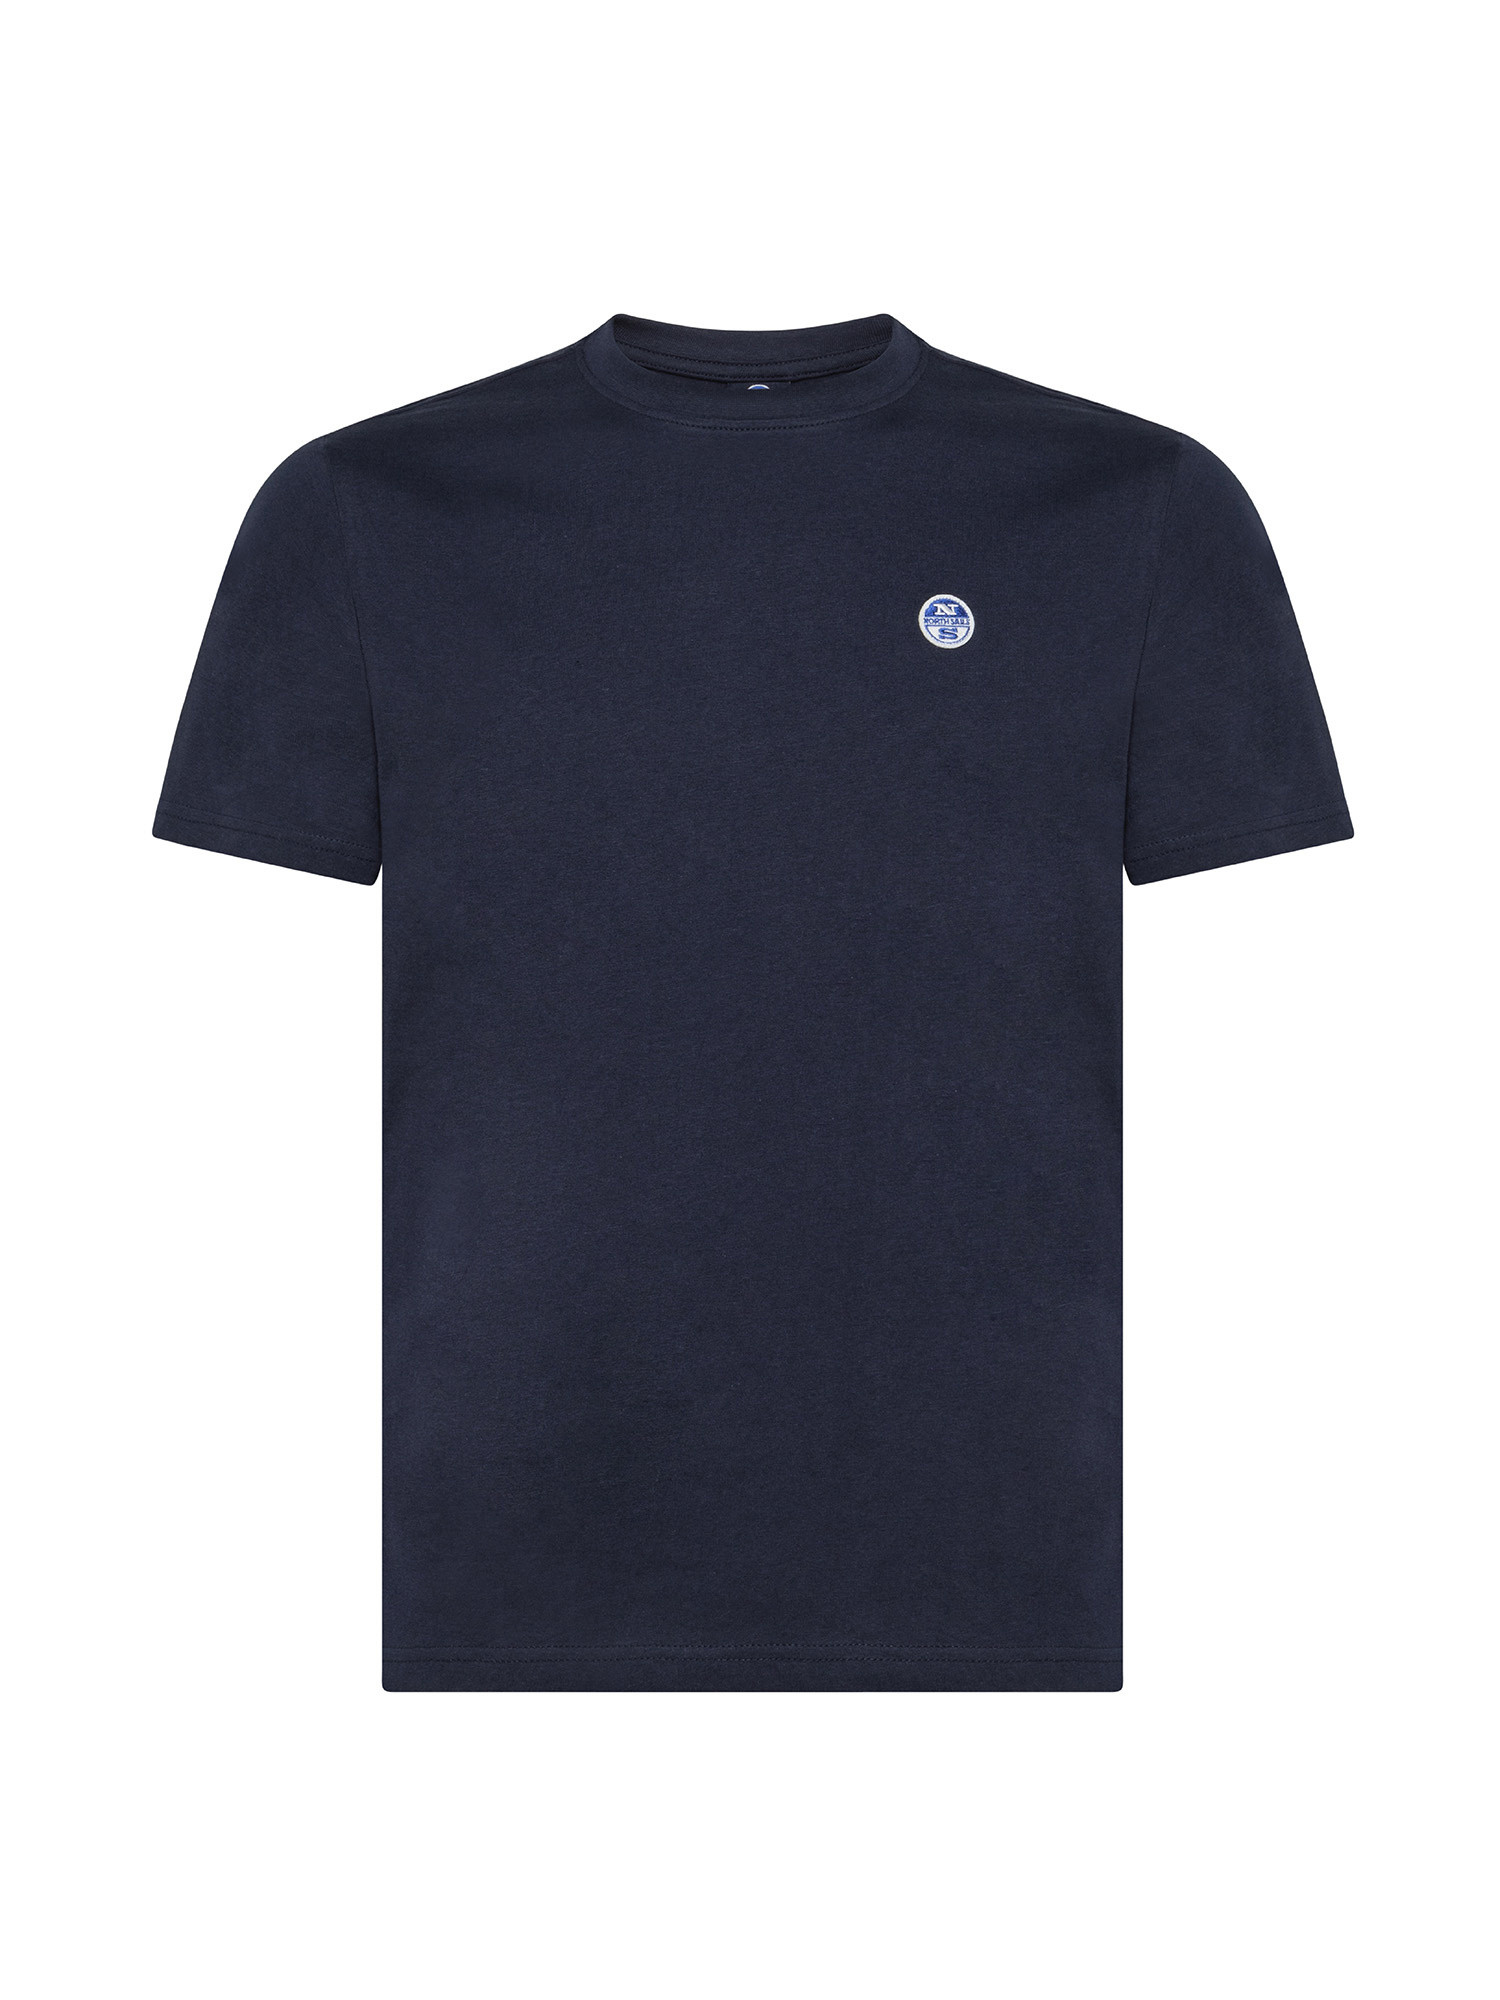 T-shirt a maniche corte con logo, Blu, large image number 0